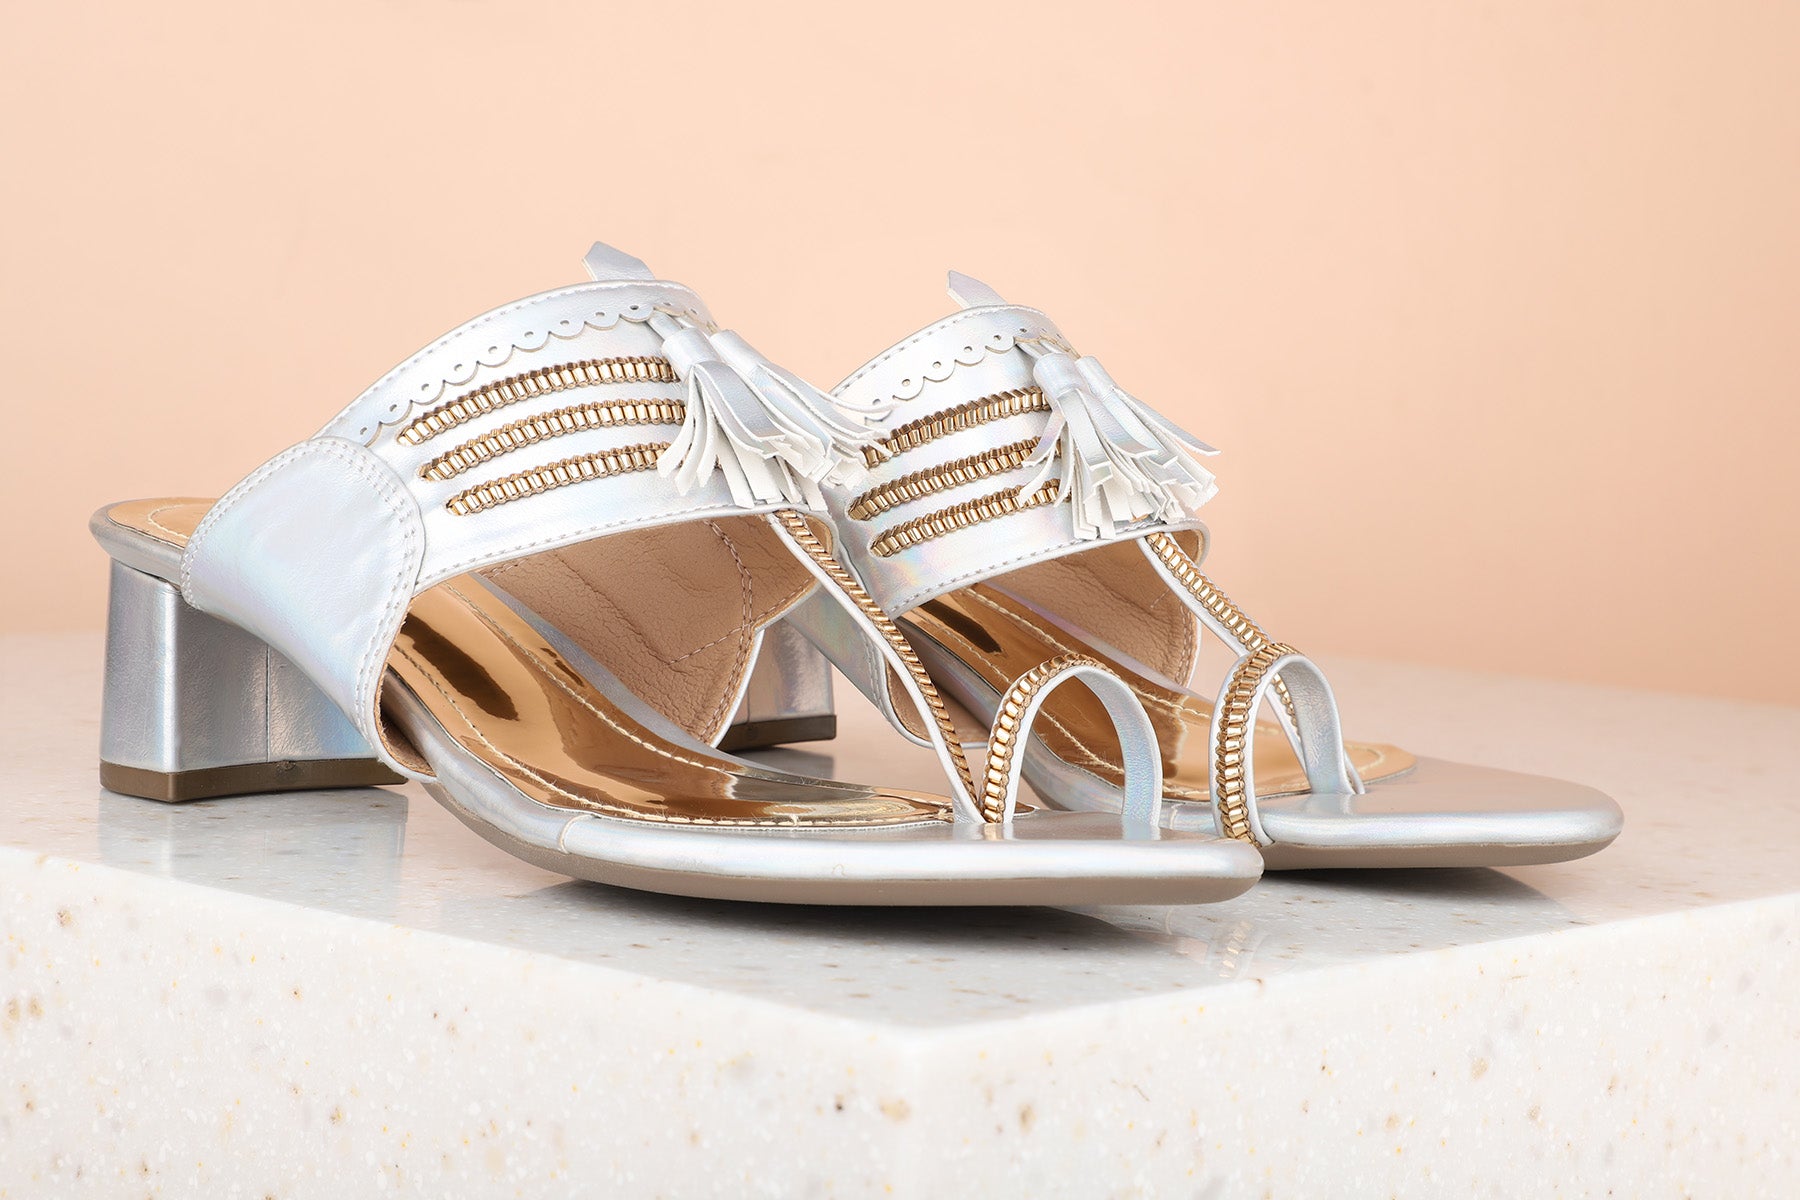 Buy Inc.5 Women Transparent & Antique-Toned Block Heels at Amazon.in